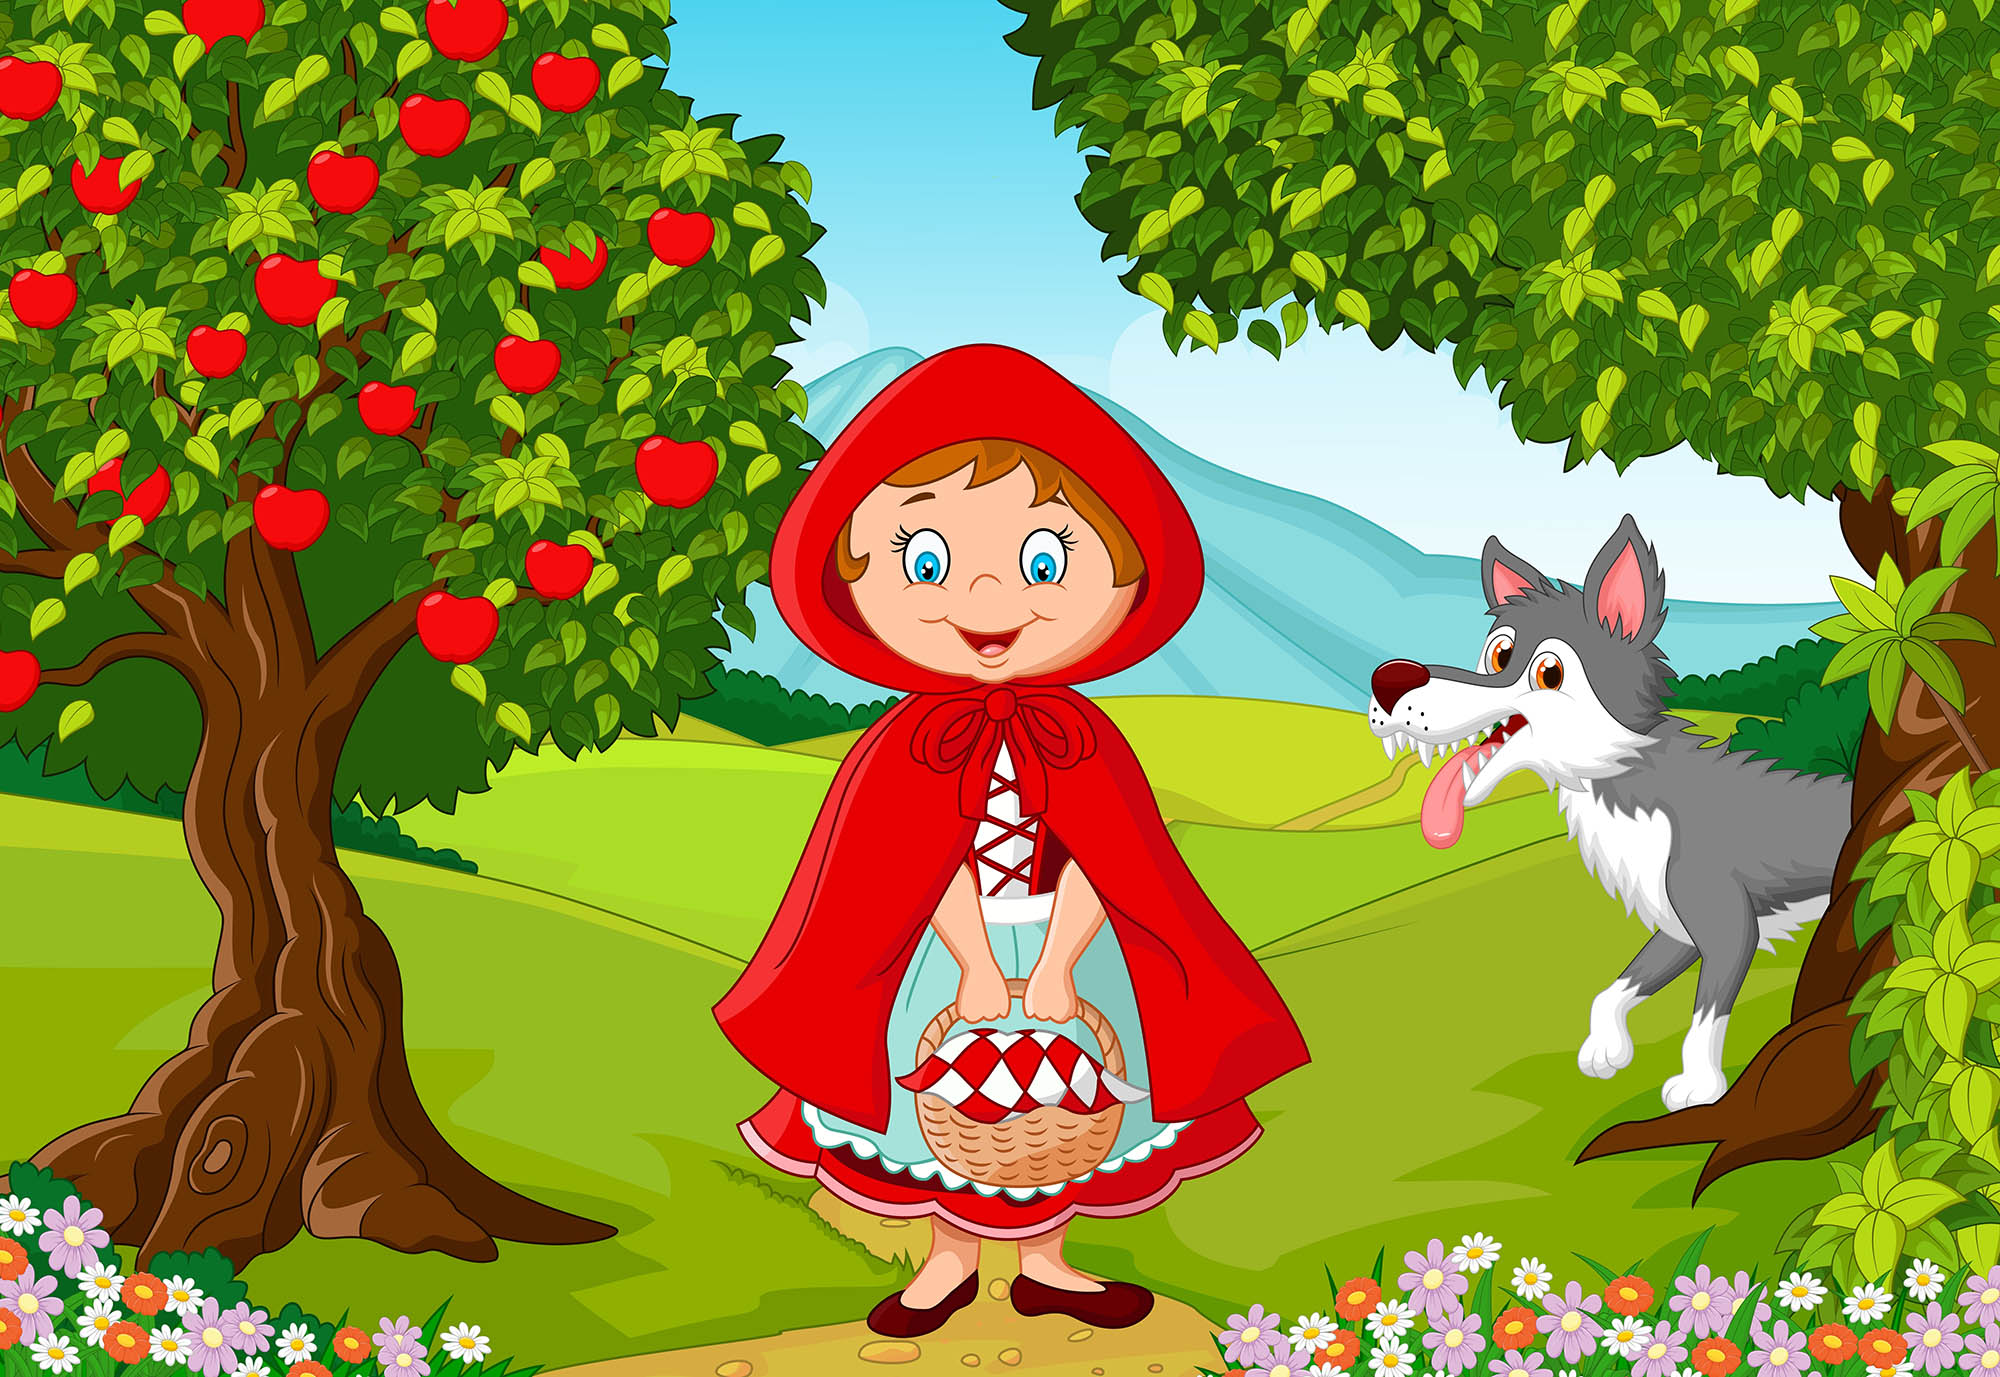 fotoelektrisk quagga bunke The Story of The Little Red Riding Hood | Article